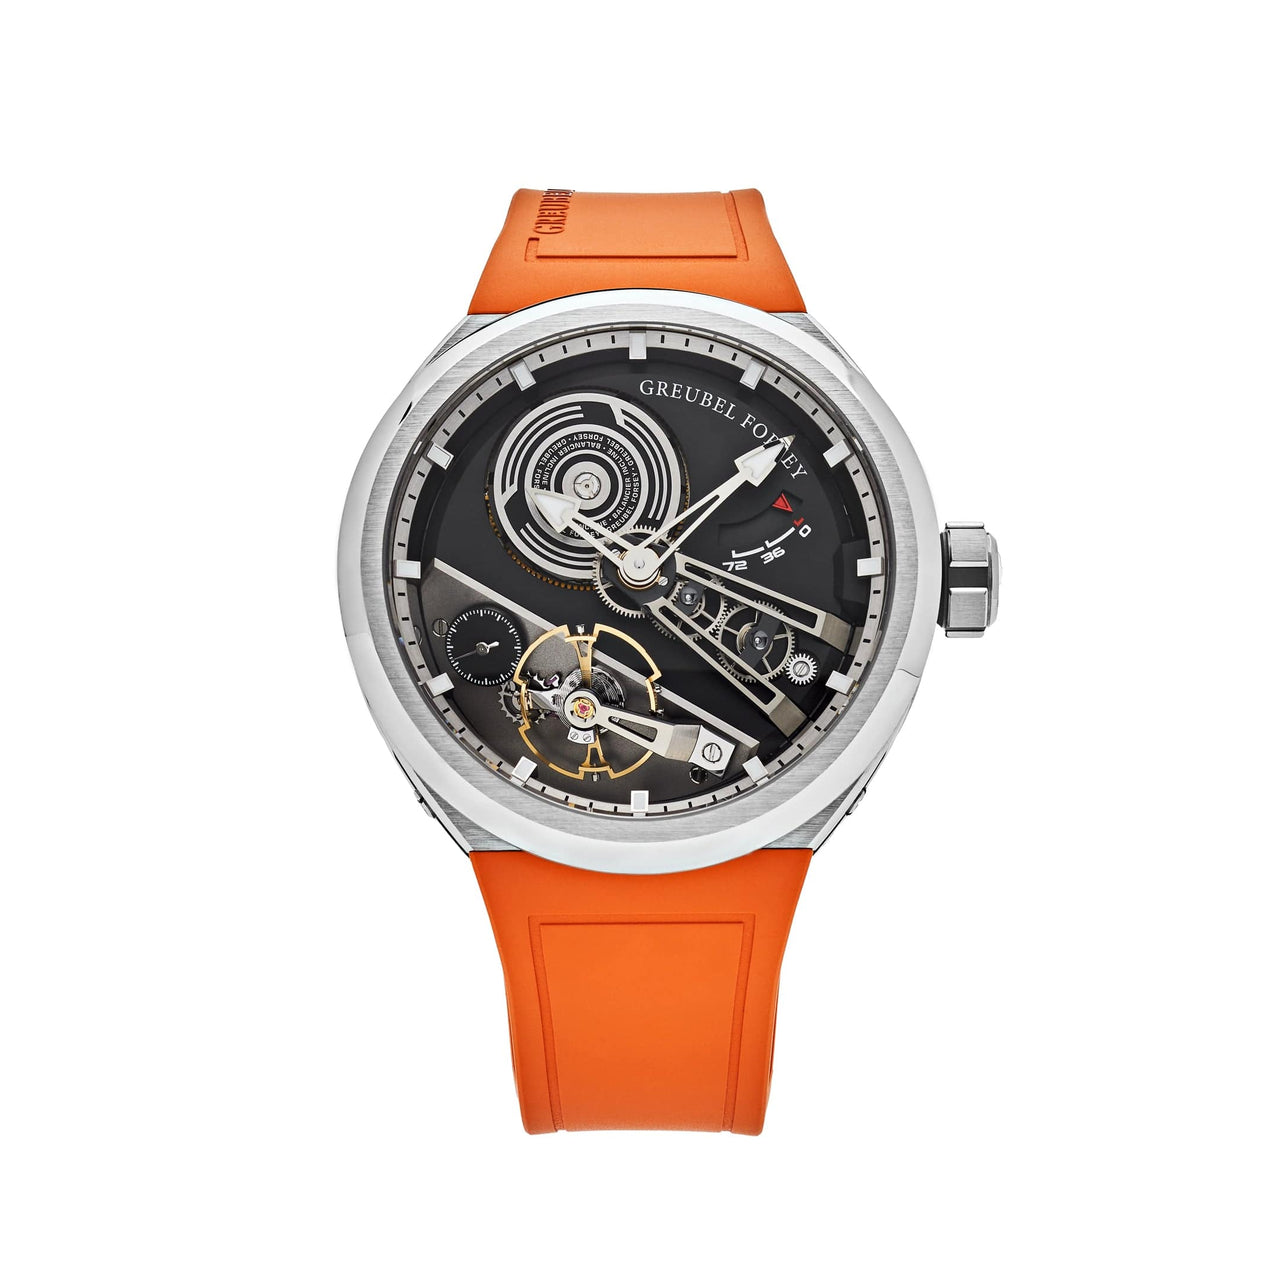 Luxury Watch Greubel Forsey Balancier Convexe S2 Titanium Limited to 88pcs Wrist Aficionado